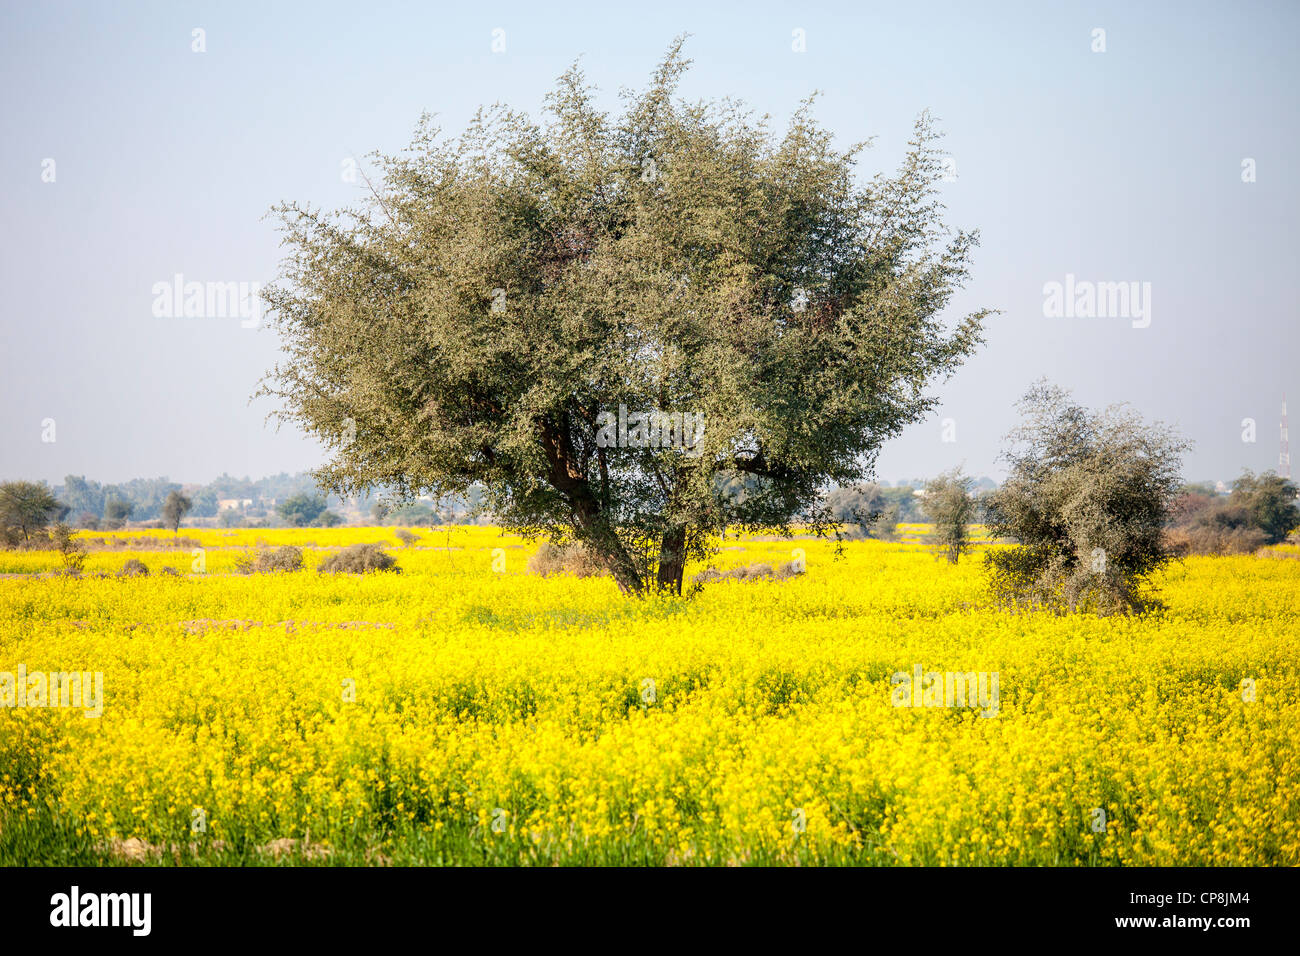 Tree in a field of mustard plants, Punjab Province, Pakistan Stock Photo